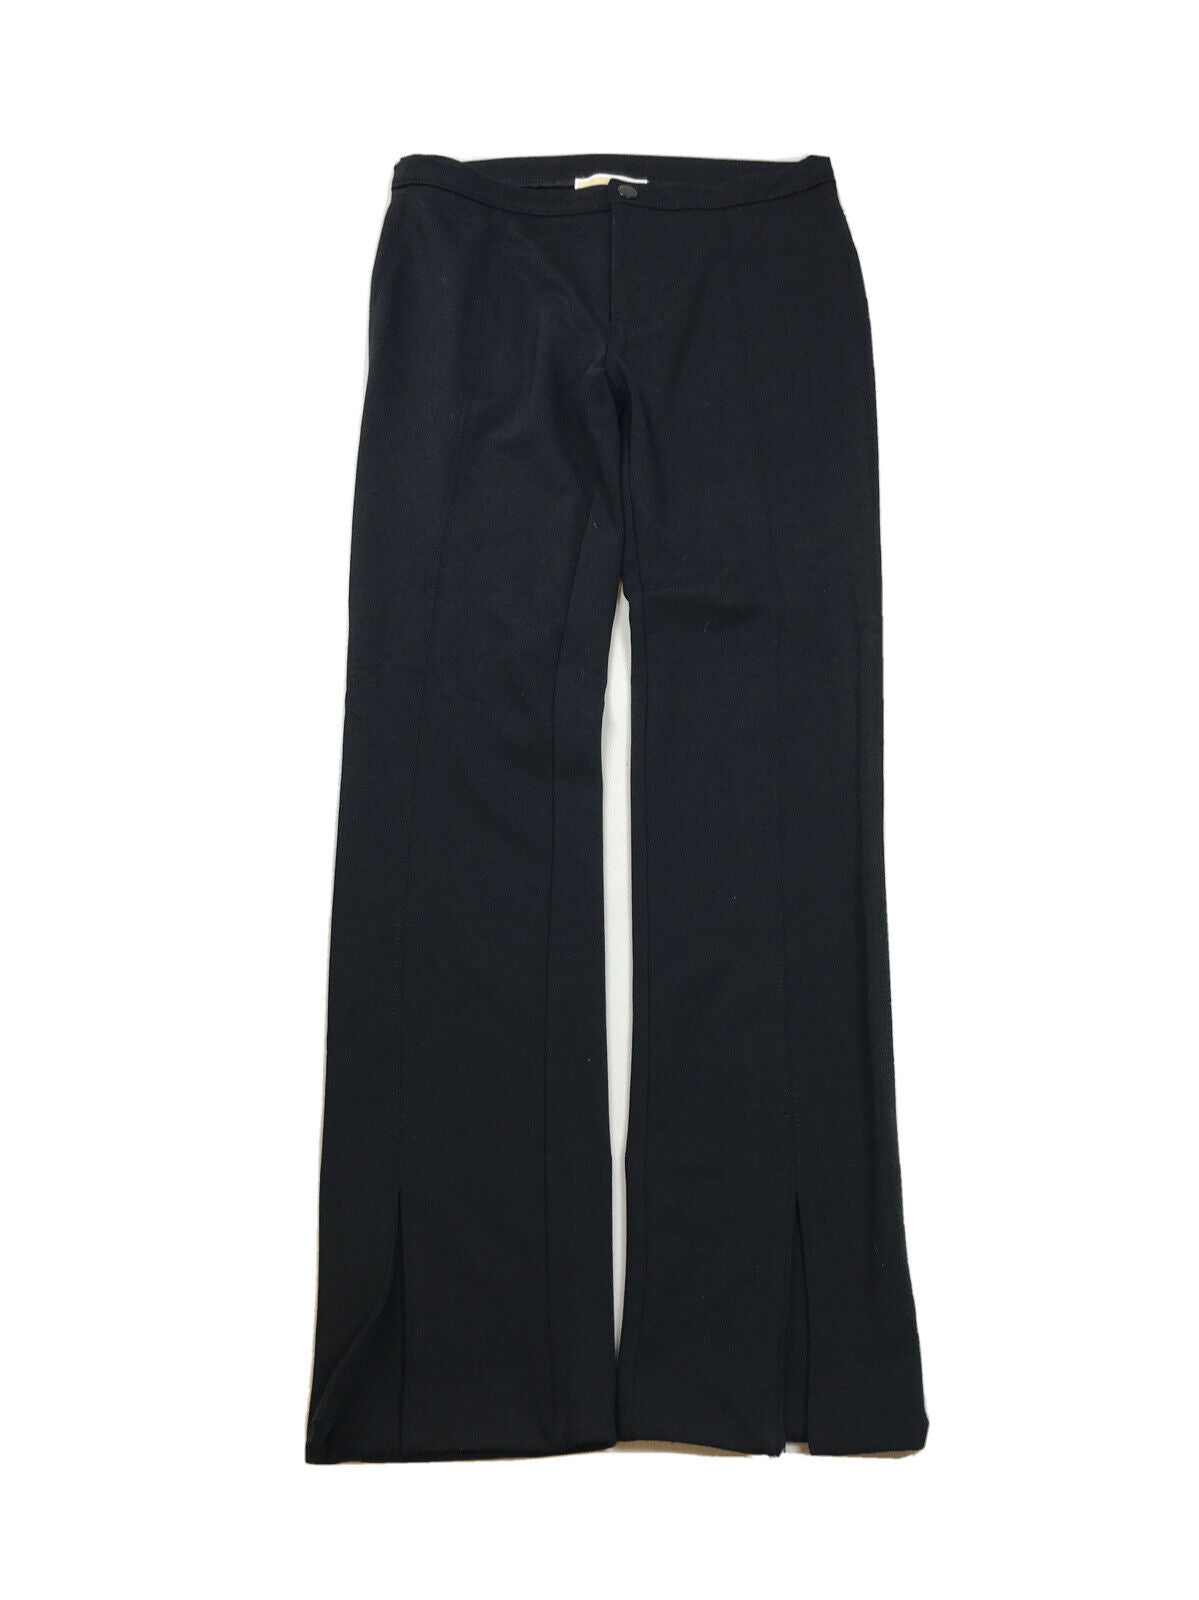 Michael Kors Women's Black Straight Fit Dress Pants - S